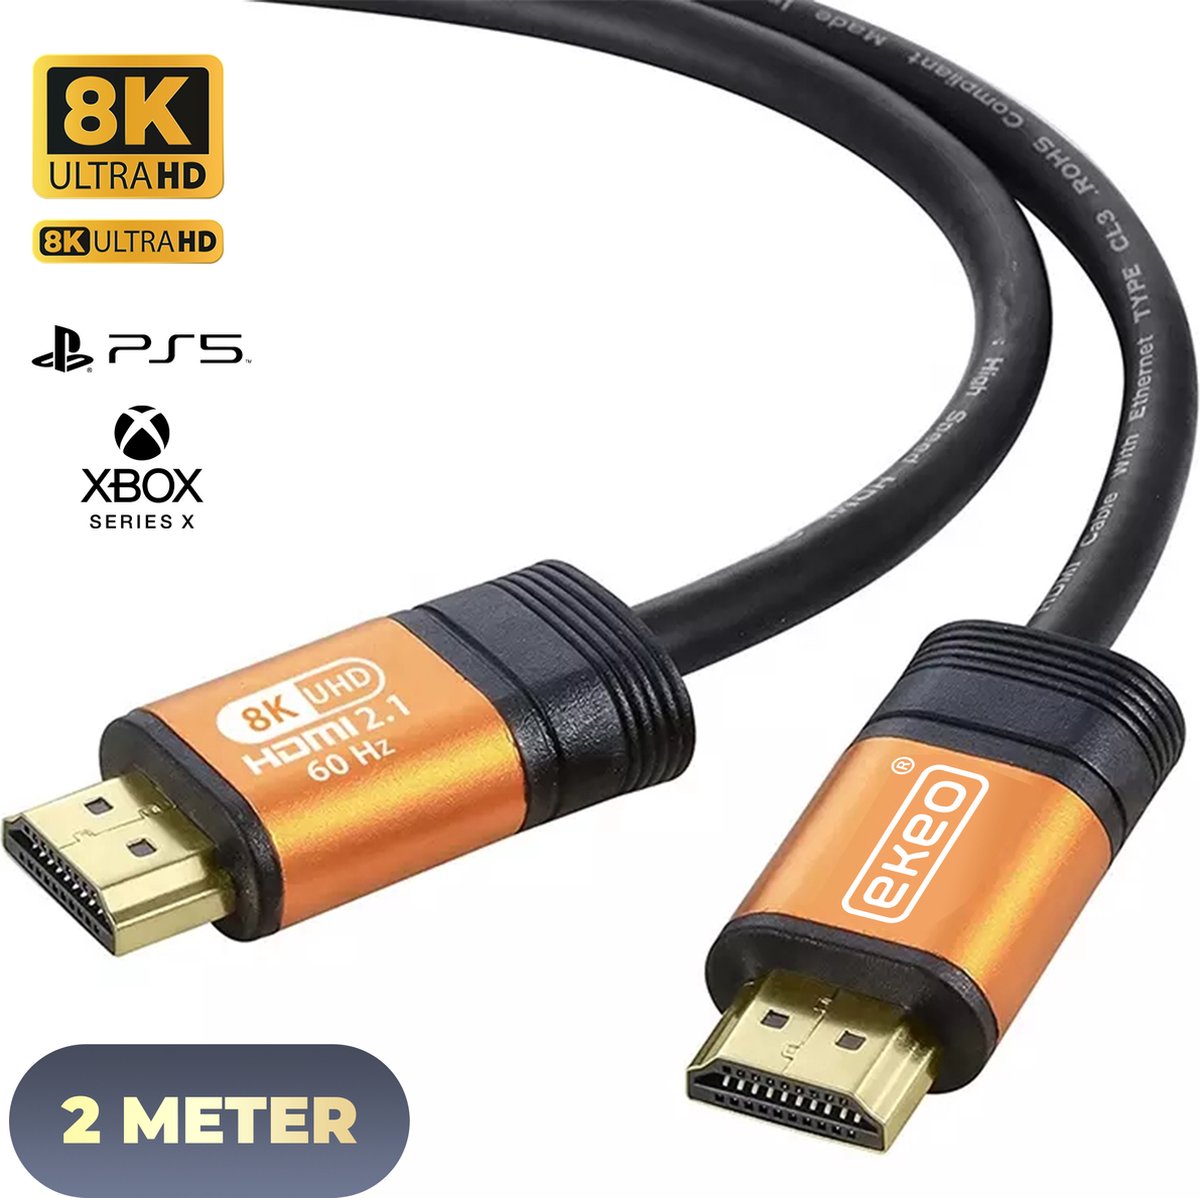 PRO HDMI Kabel 2.1 - Ultra HD High Speed 8K - HDMI naar HDMI - Xbox Series X & PS5 - 2 meter